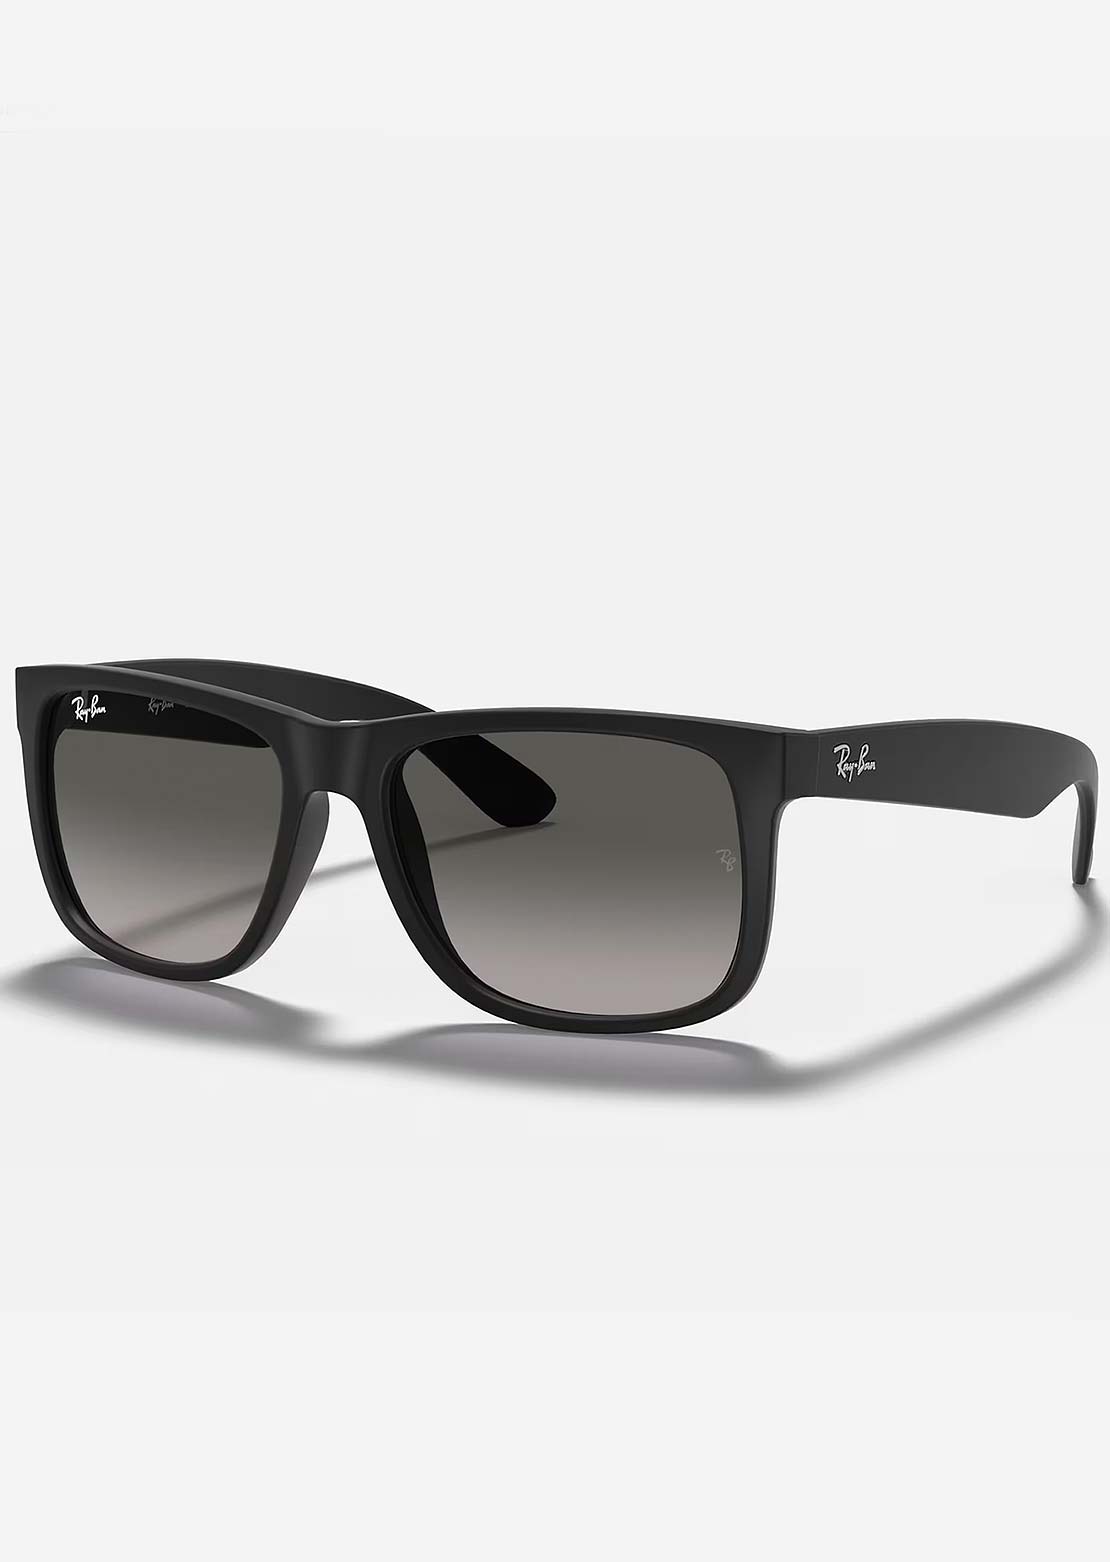 Ray-Ban Justin Classic RB4165 Polarized Sunglasses Black